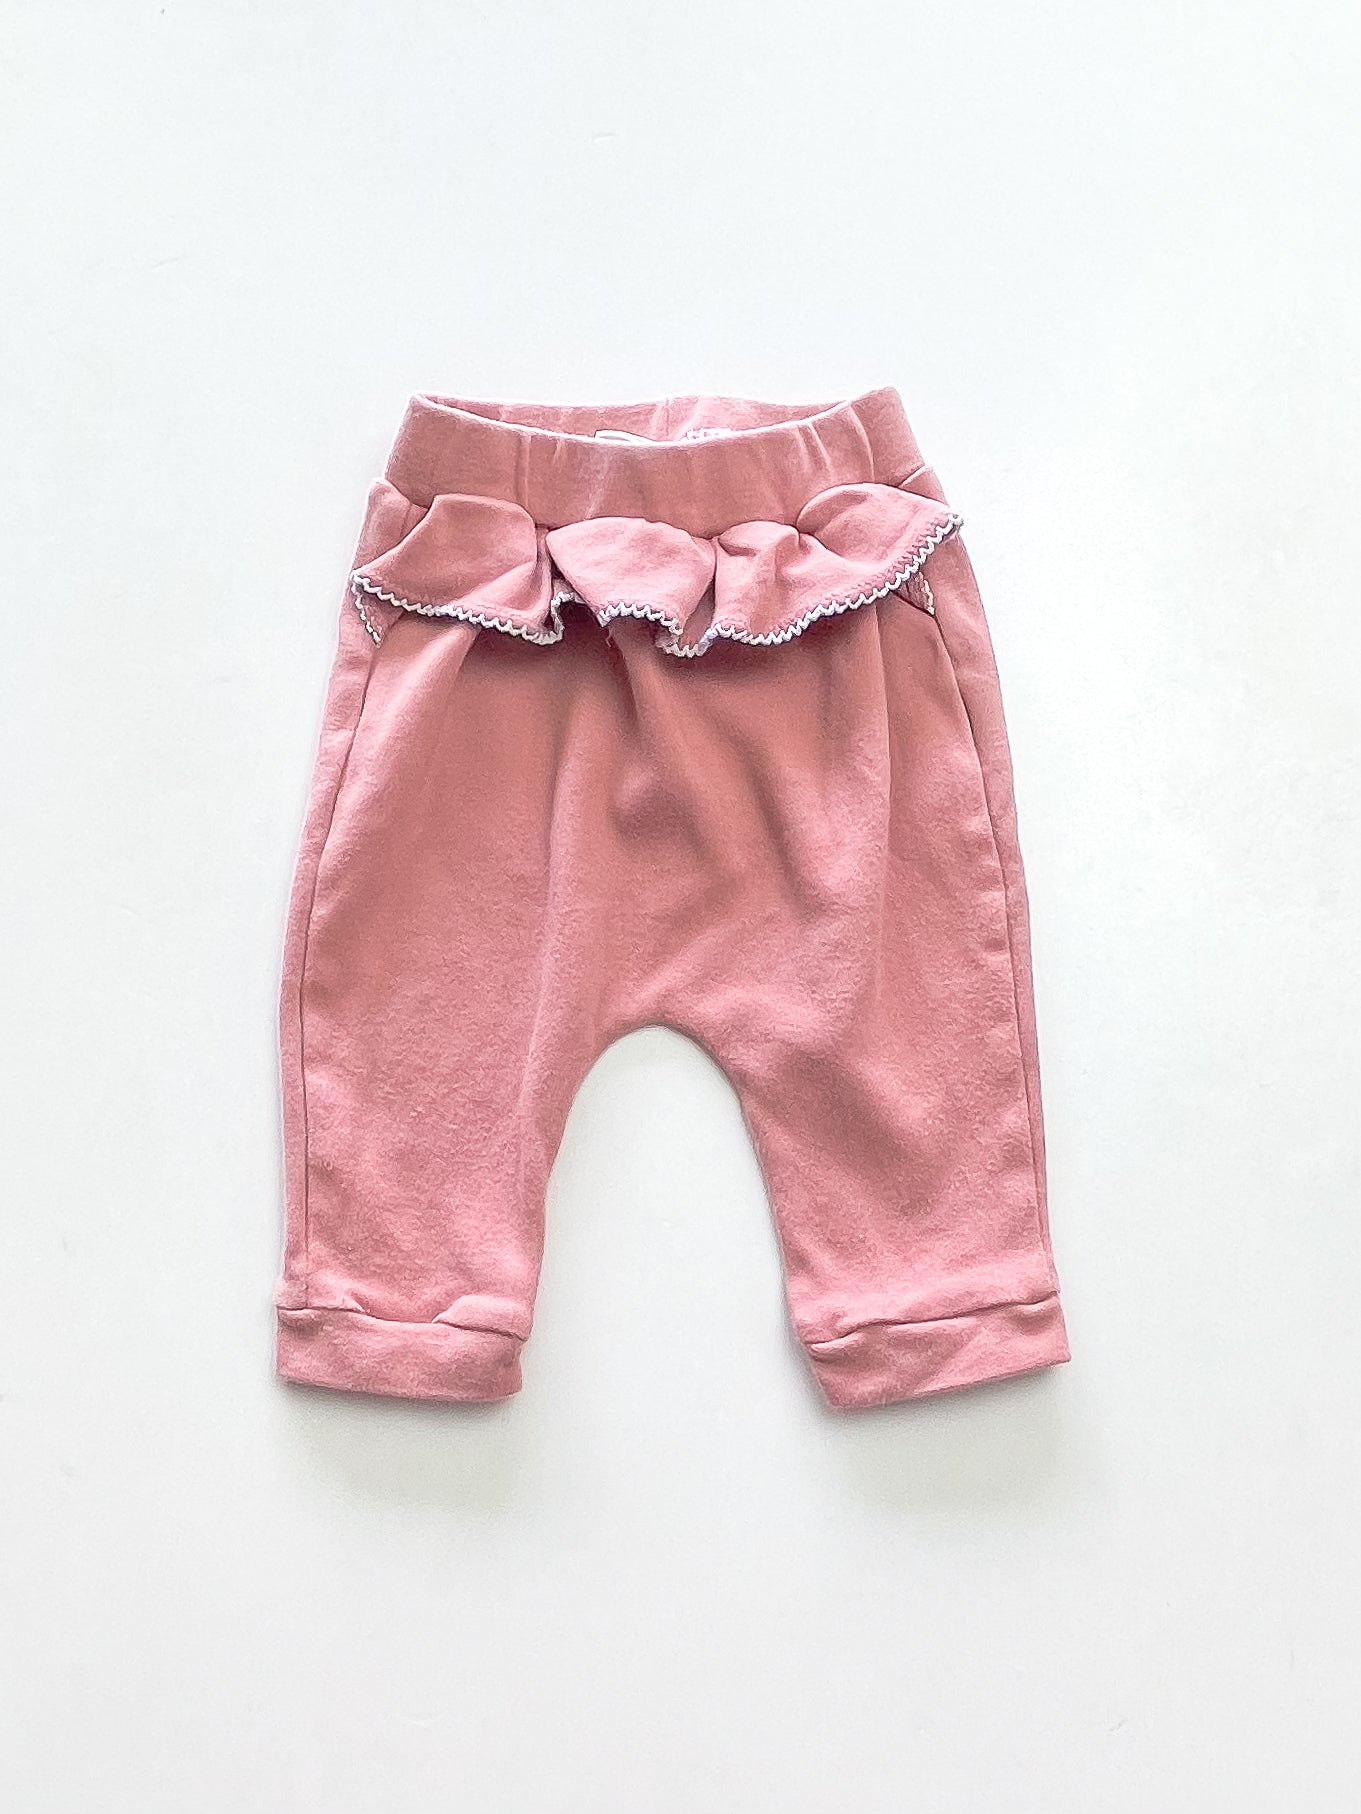 Little Bundle frill pants (newborn)